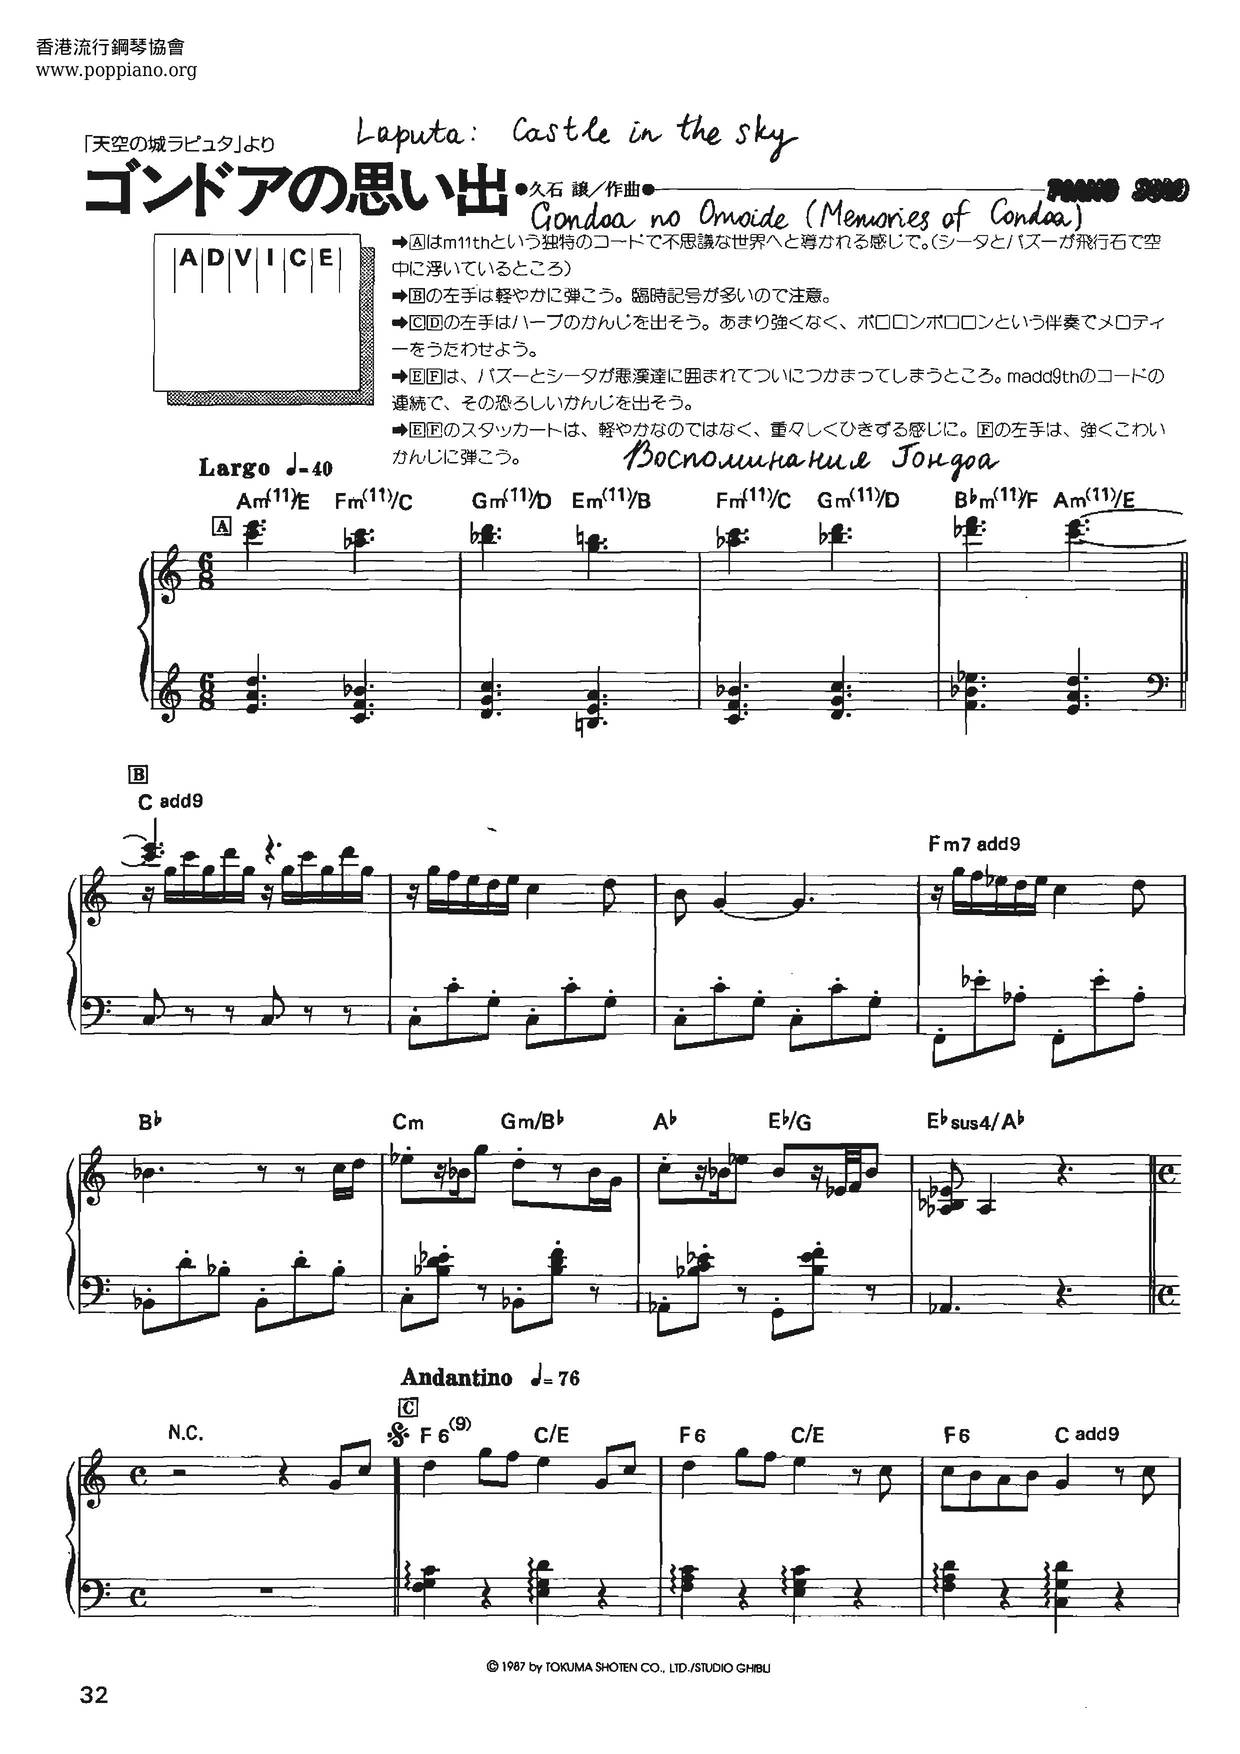 天空之城 - Memories Of Gondoa Score